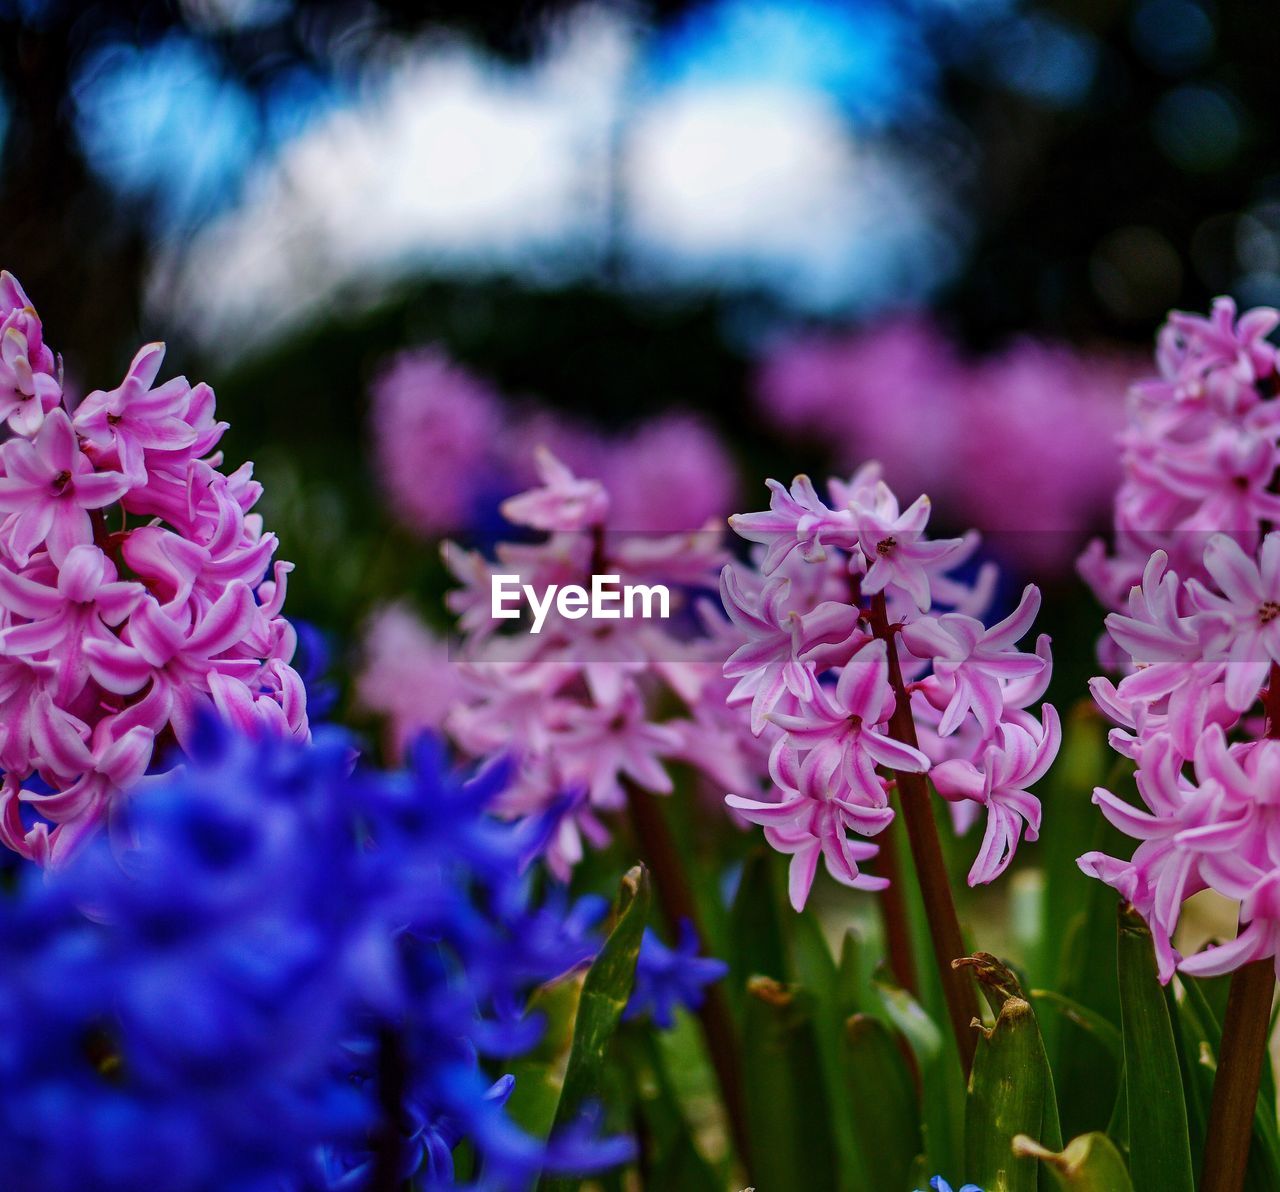 Pink hyacinths blooming in park